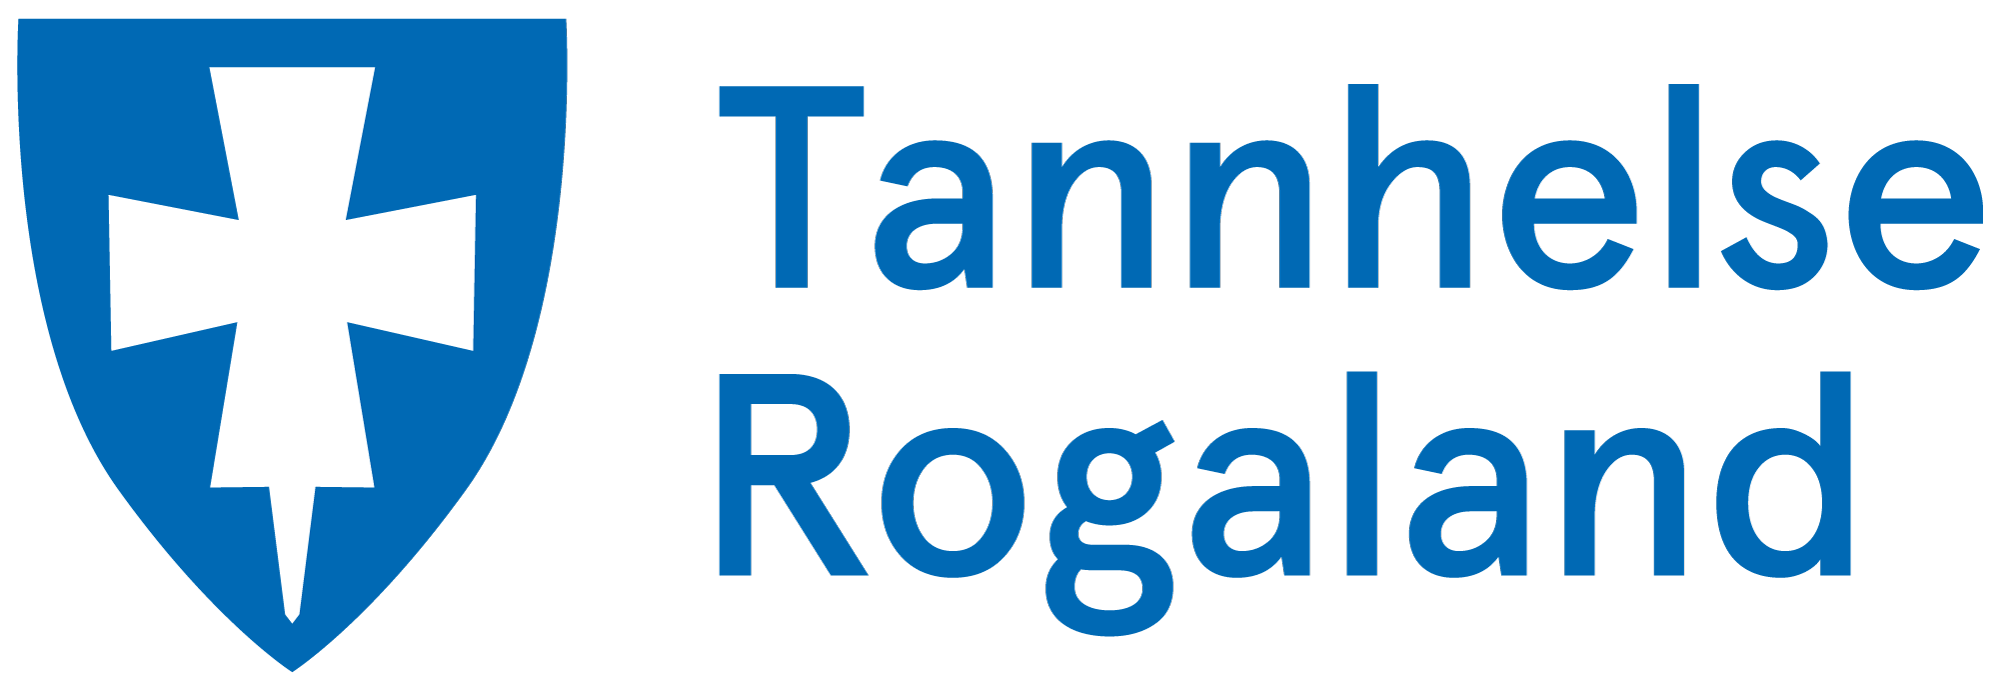 Tannhelse Rogaland logo
